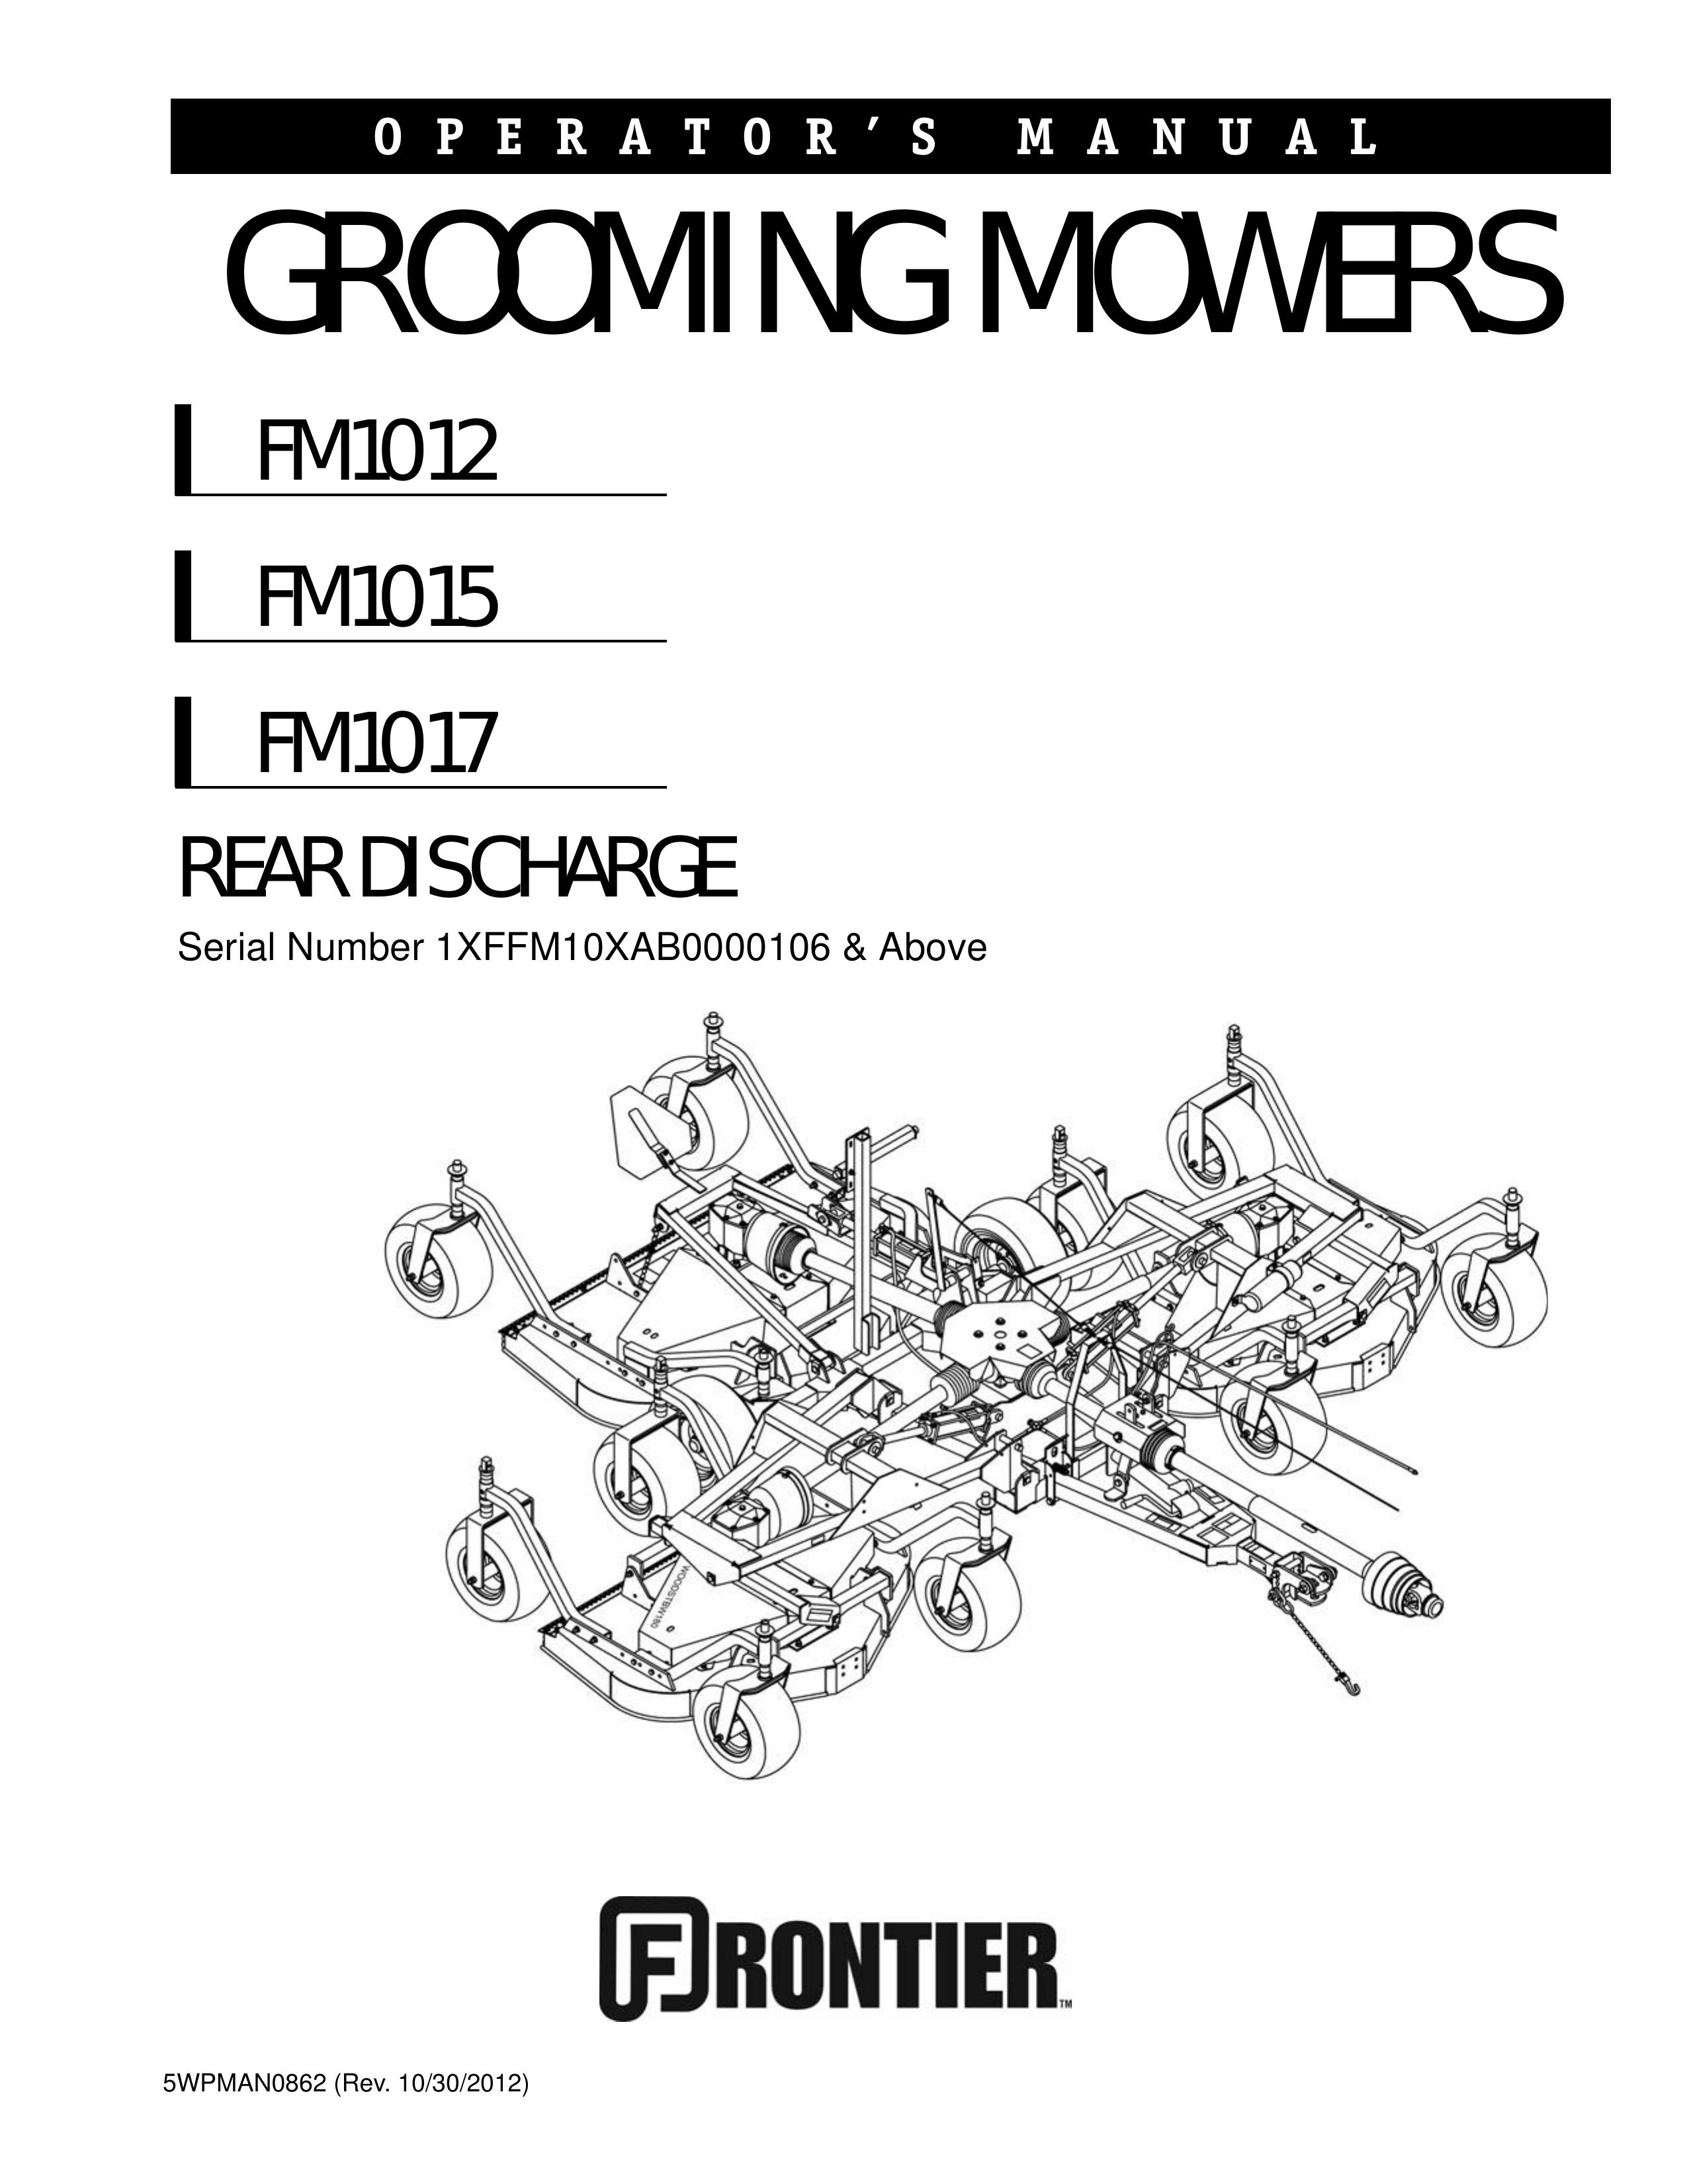 John Deere 1XFFM10XAB0000106 Lawn Mower User Manual